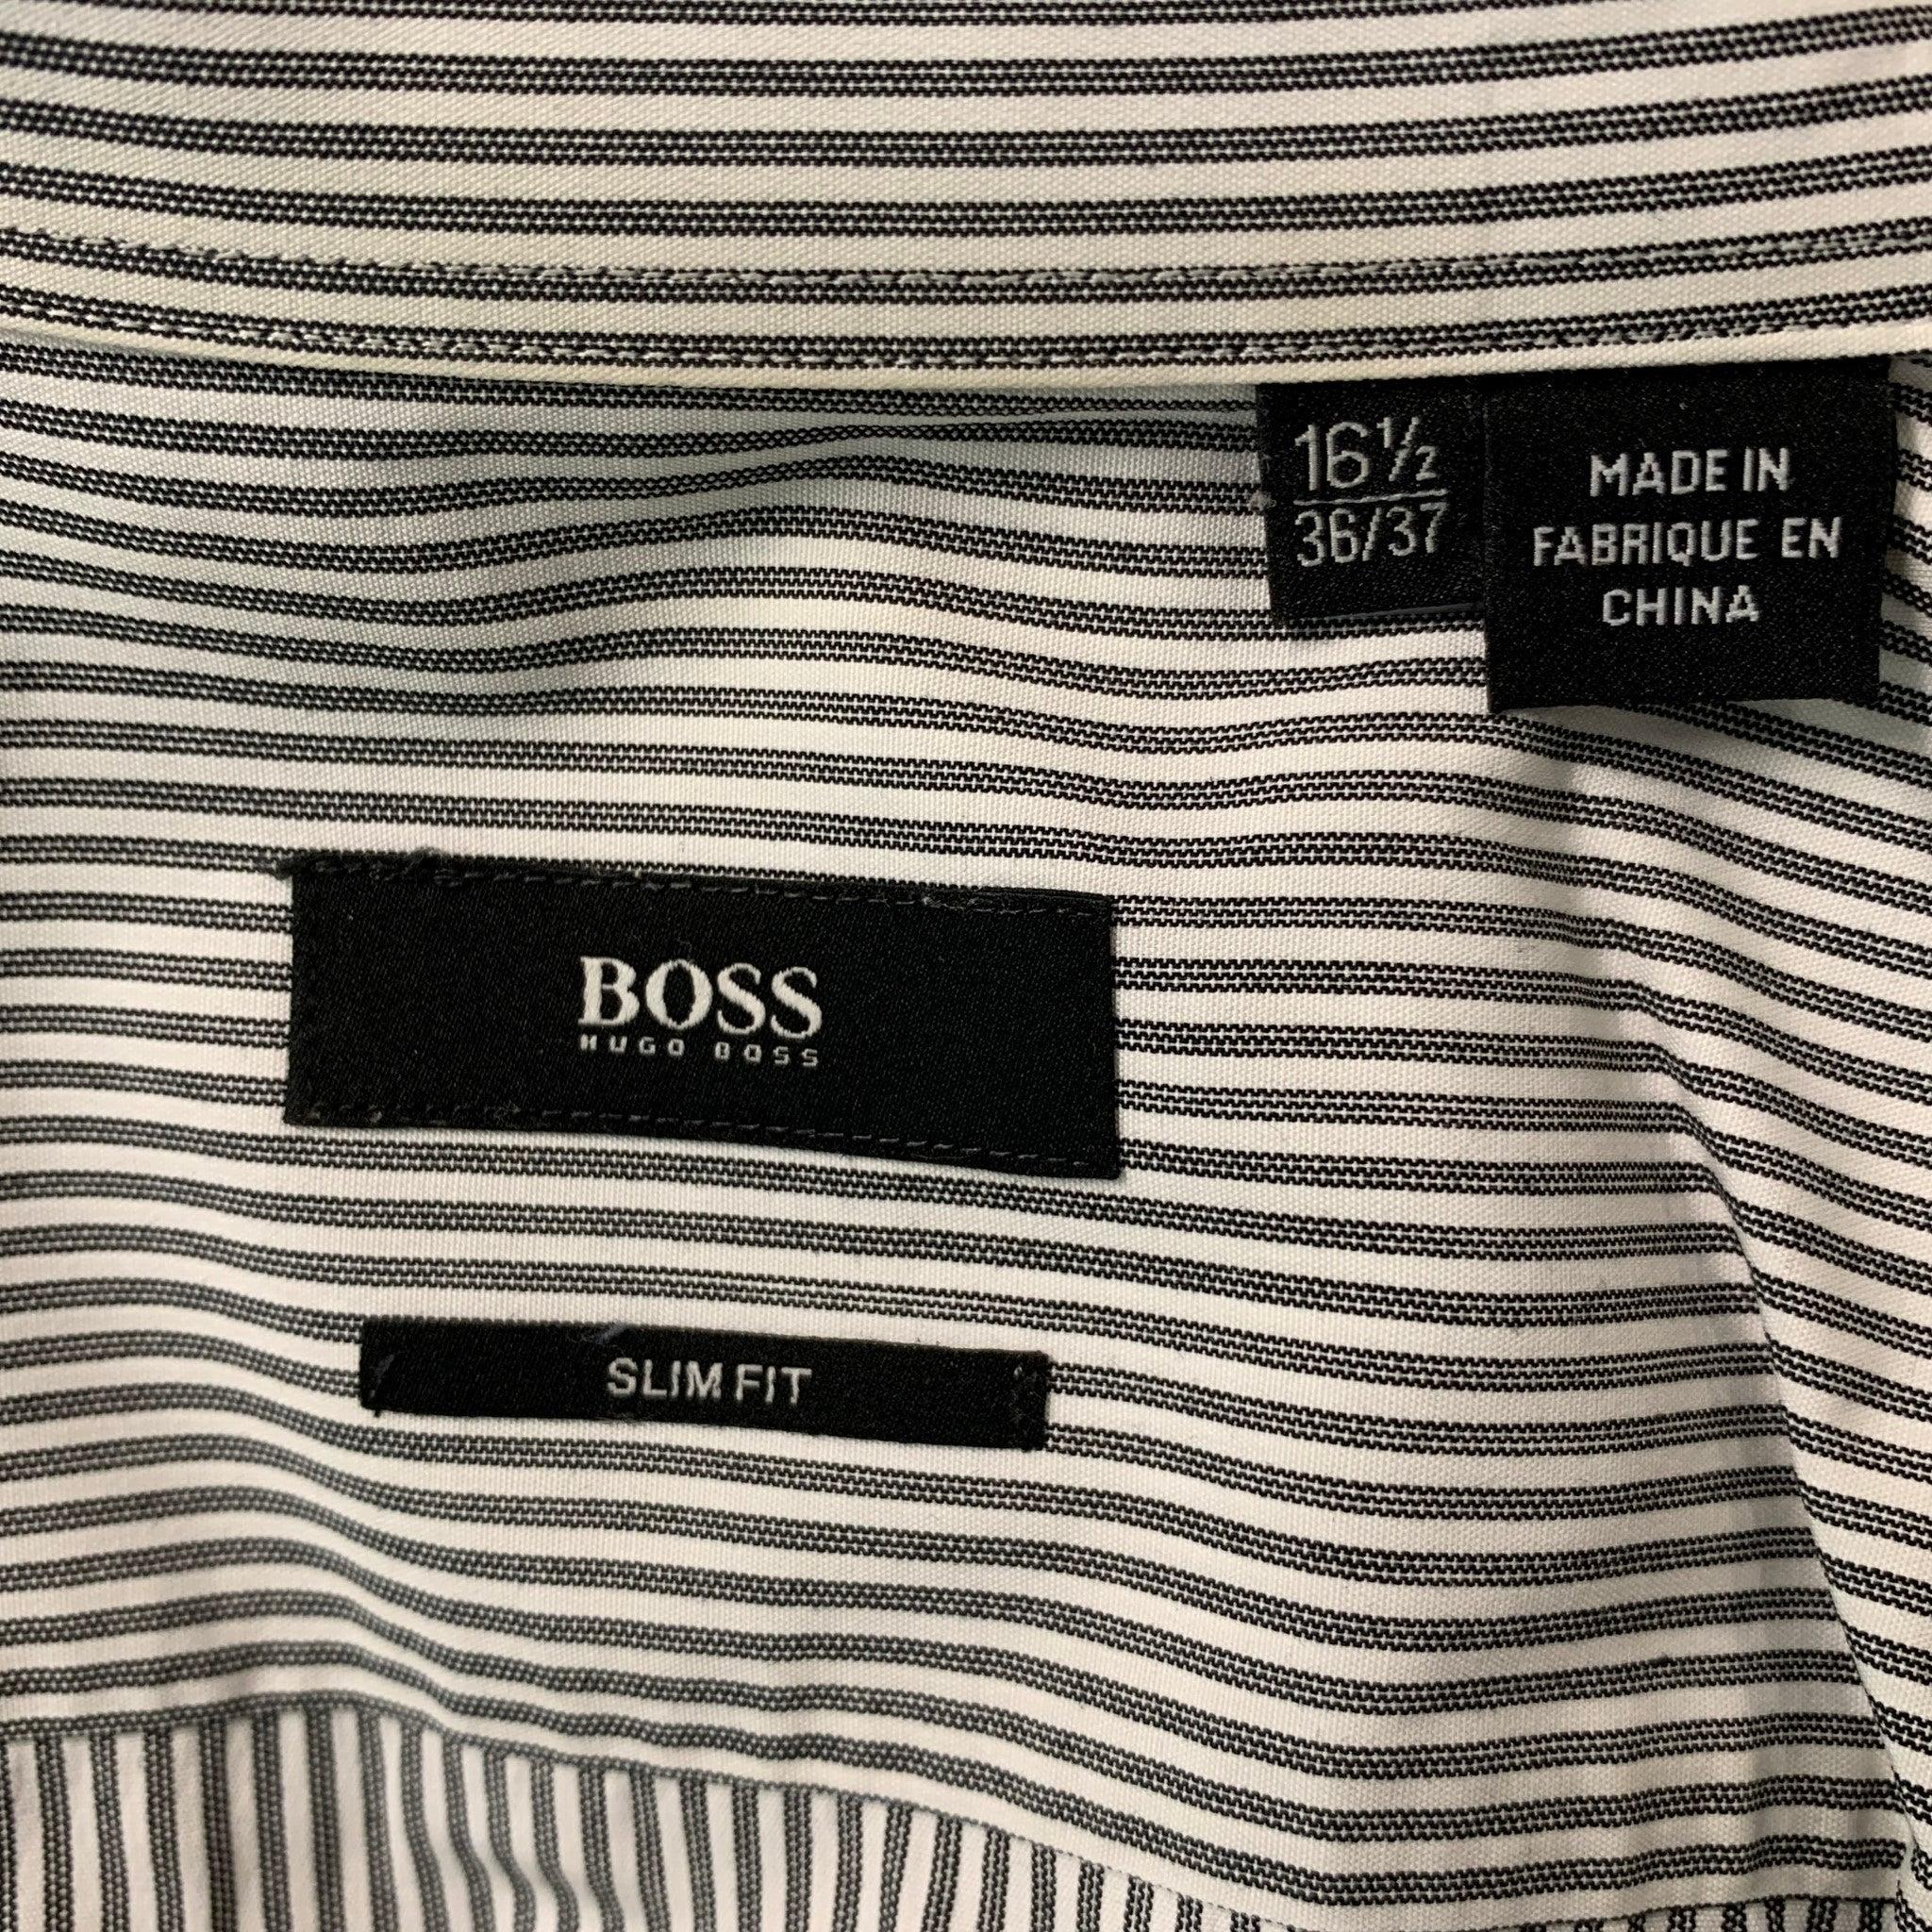 BOSS by HUGO BOSS Size L Black & White Stripe Cotton Long Sleeve Shirt For Sale 1